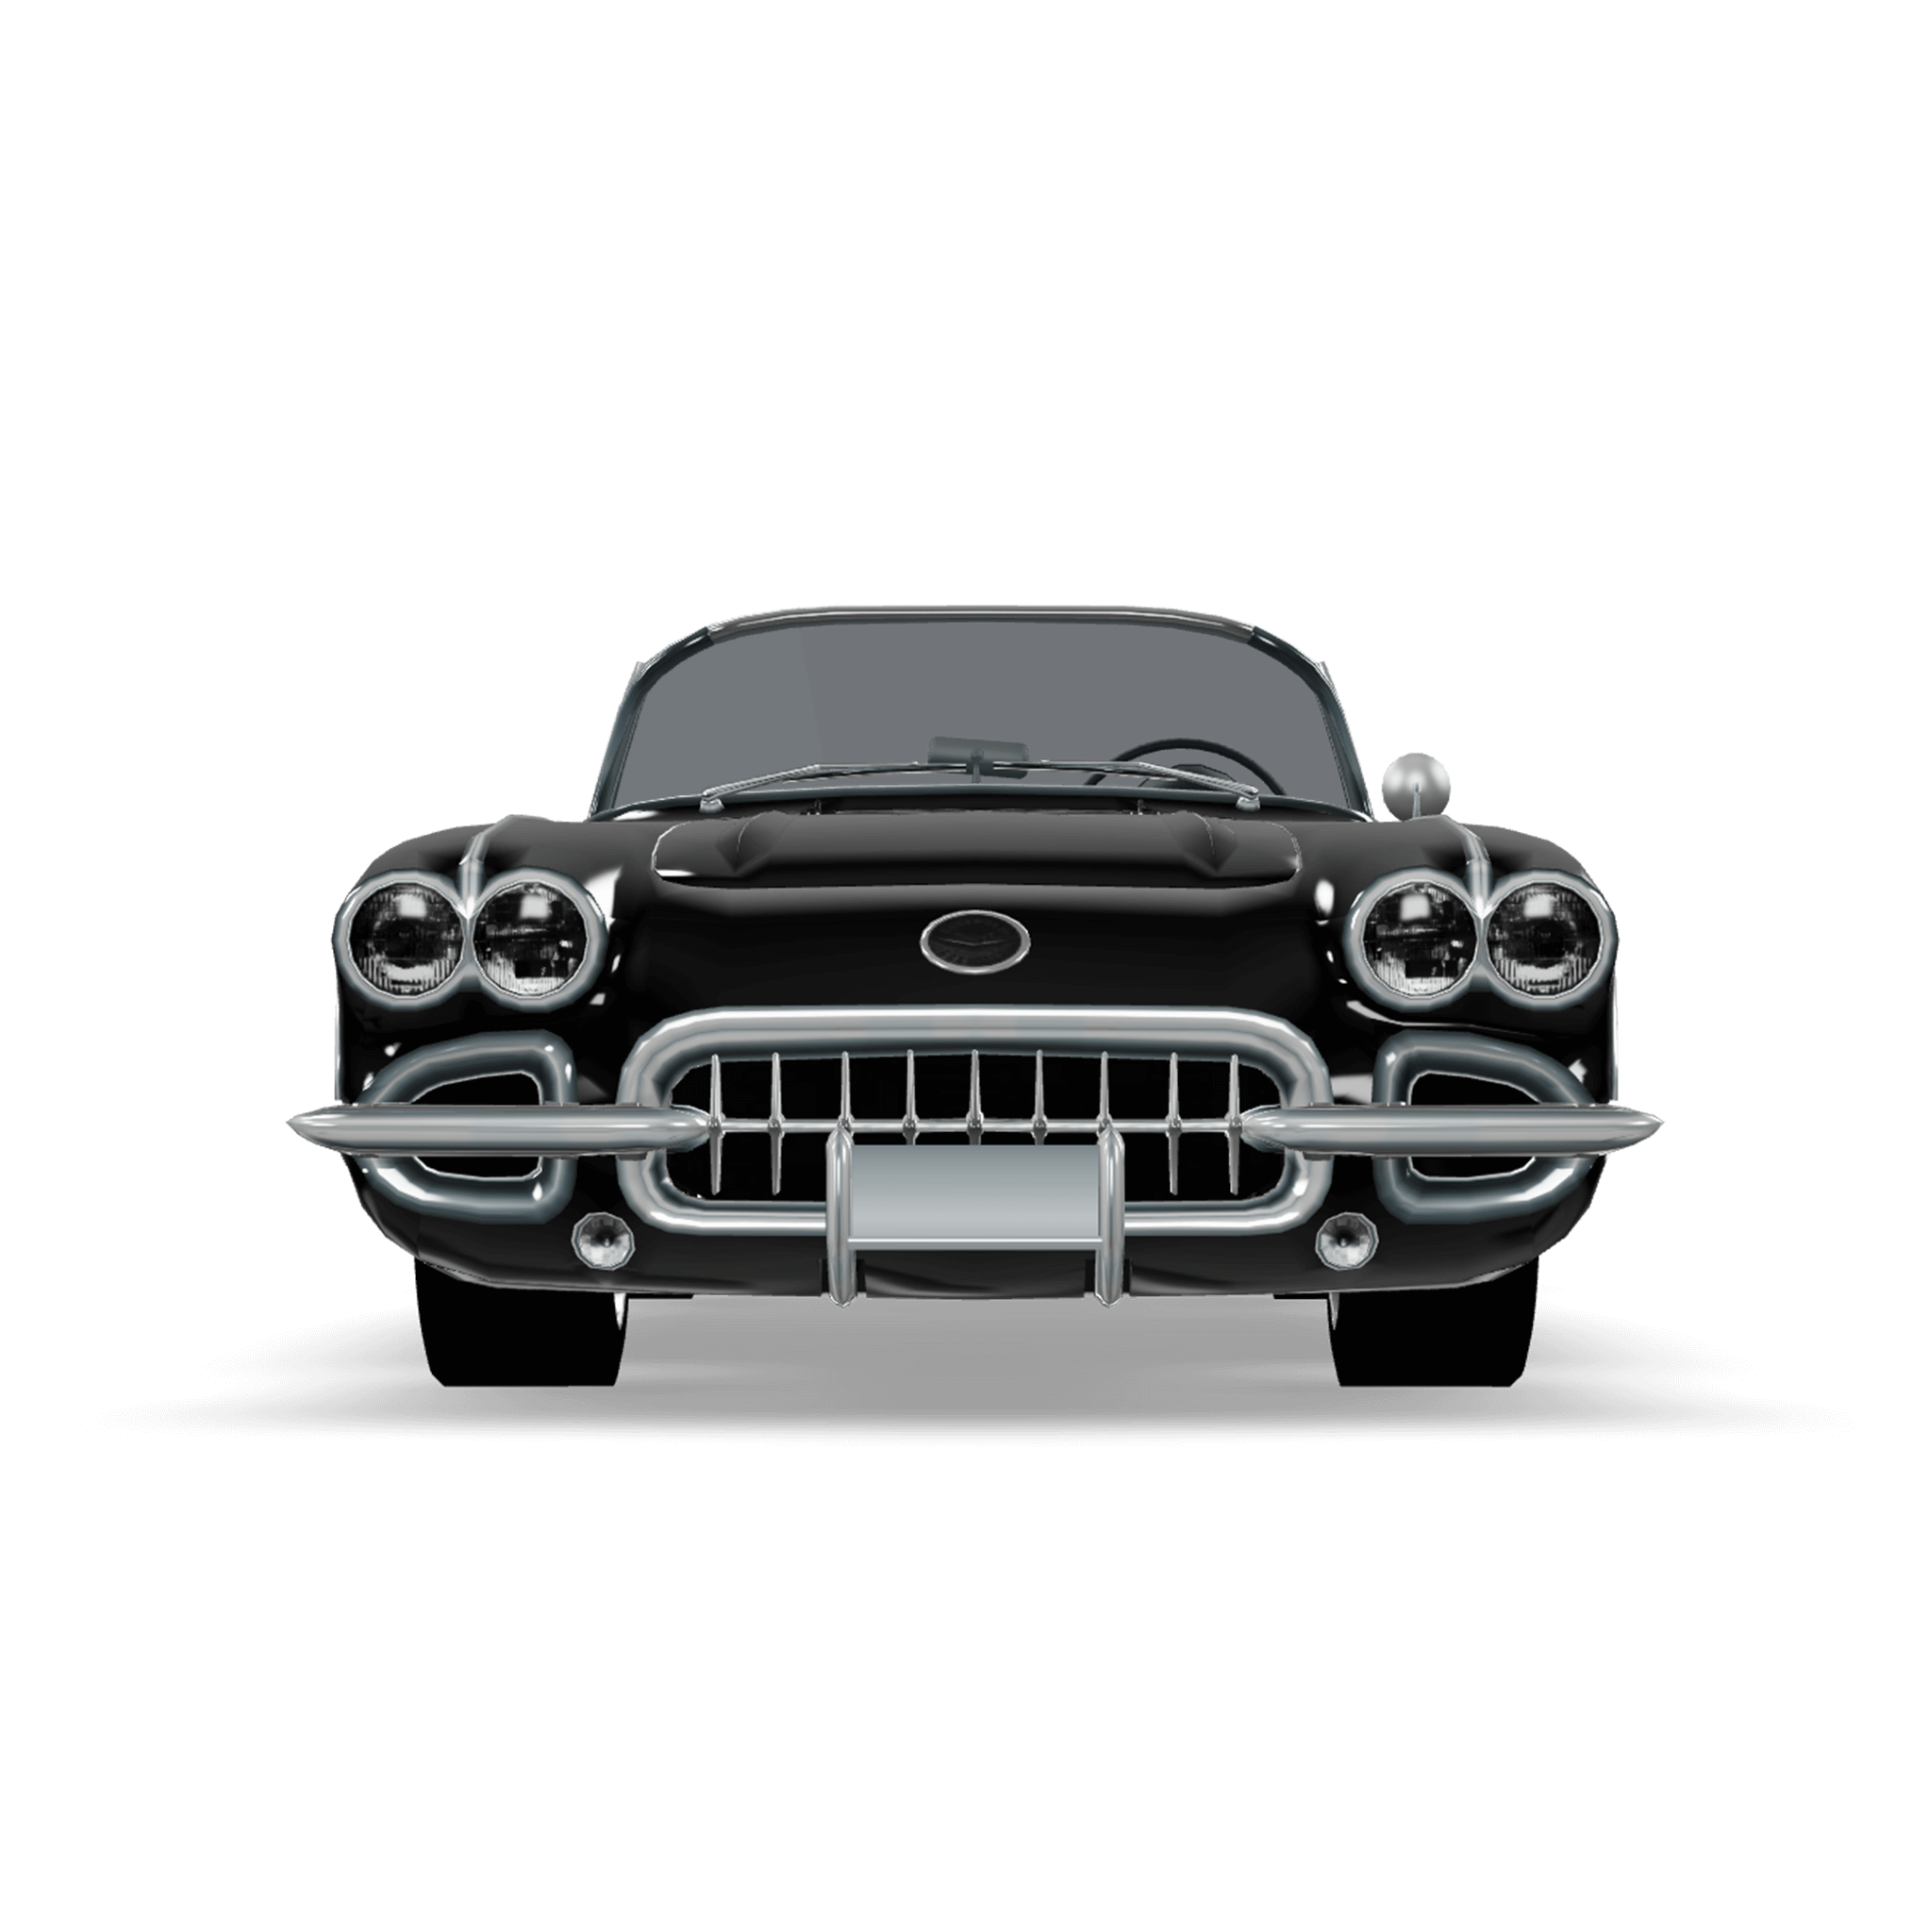 Front 3D render of the Corvette